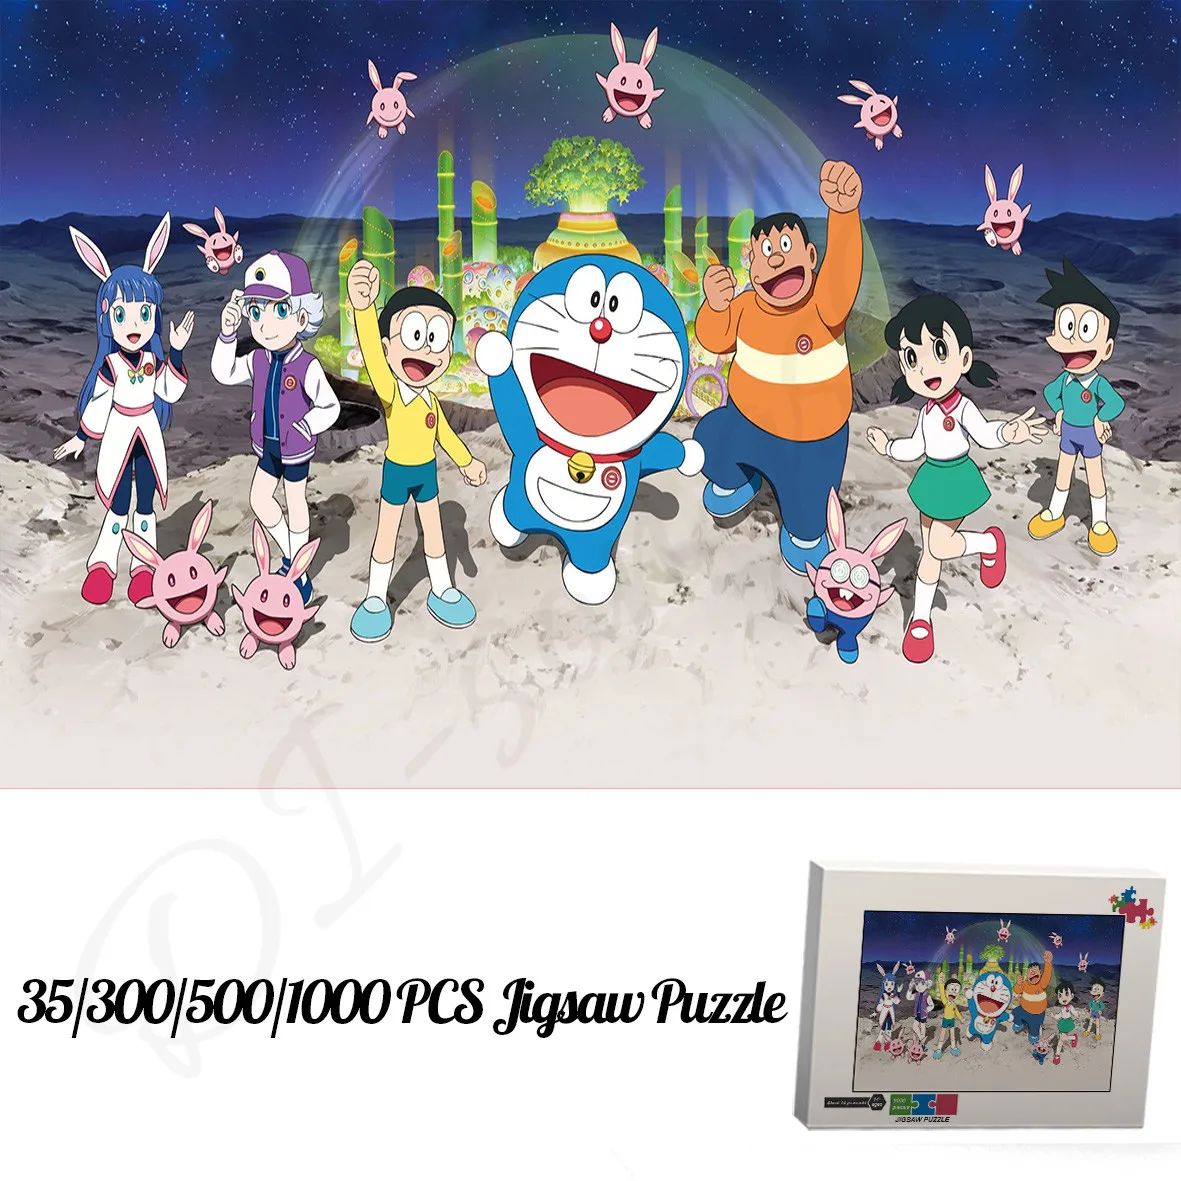 Doraemon: Nobita's Lunar Adventures Jigsaw Puzzles Bandai Cartoon Movie 35 300 500 1000 Pieces Wooden Puzzles Educational Toys наклейки rick and morty adventures ts7410